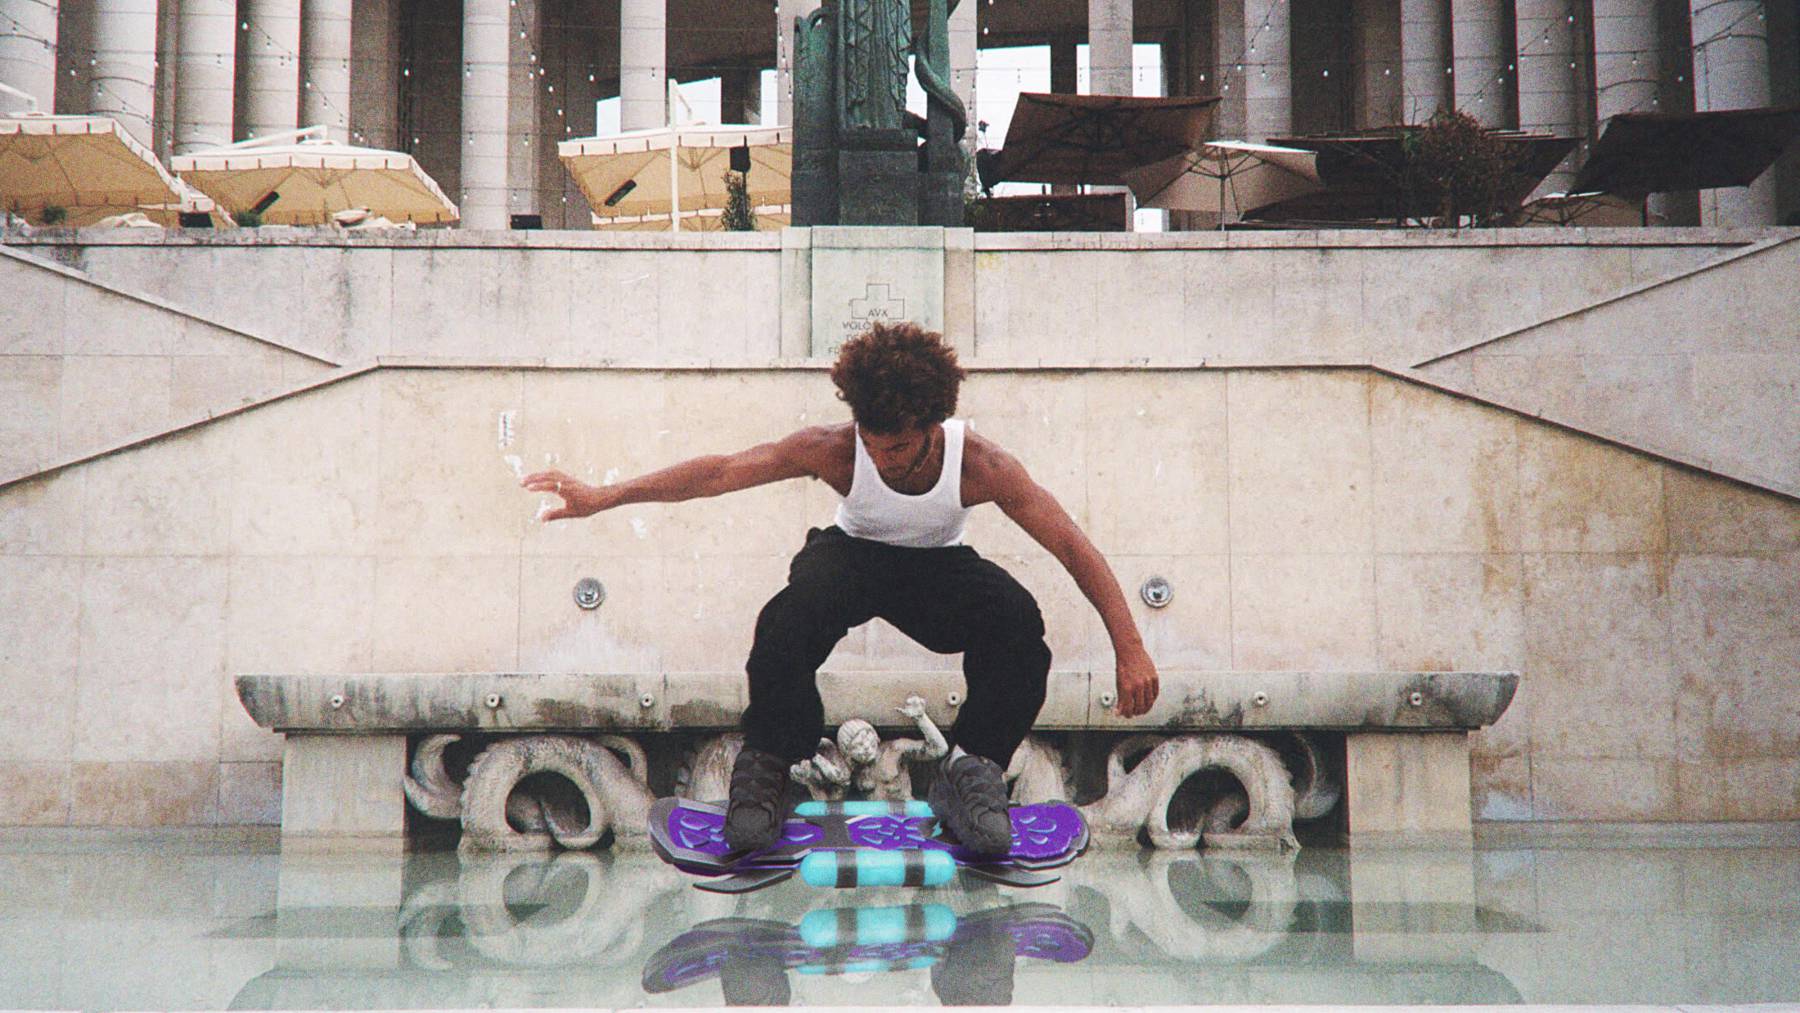 A guy skates by a building on a floating digital skateboard.